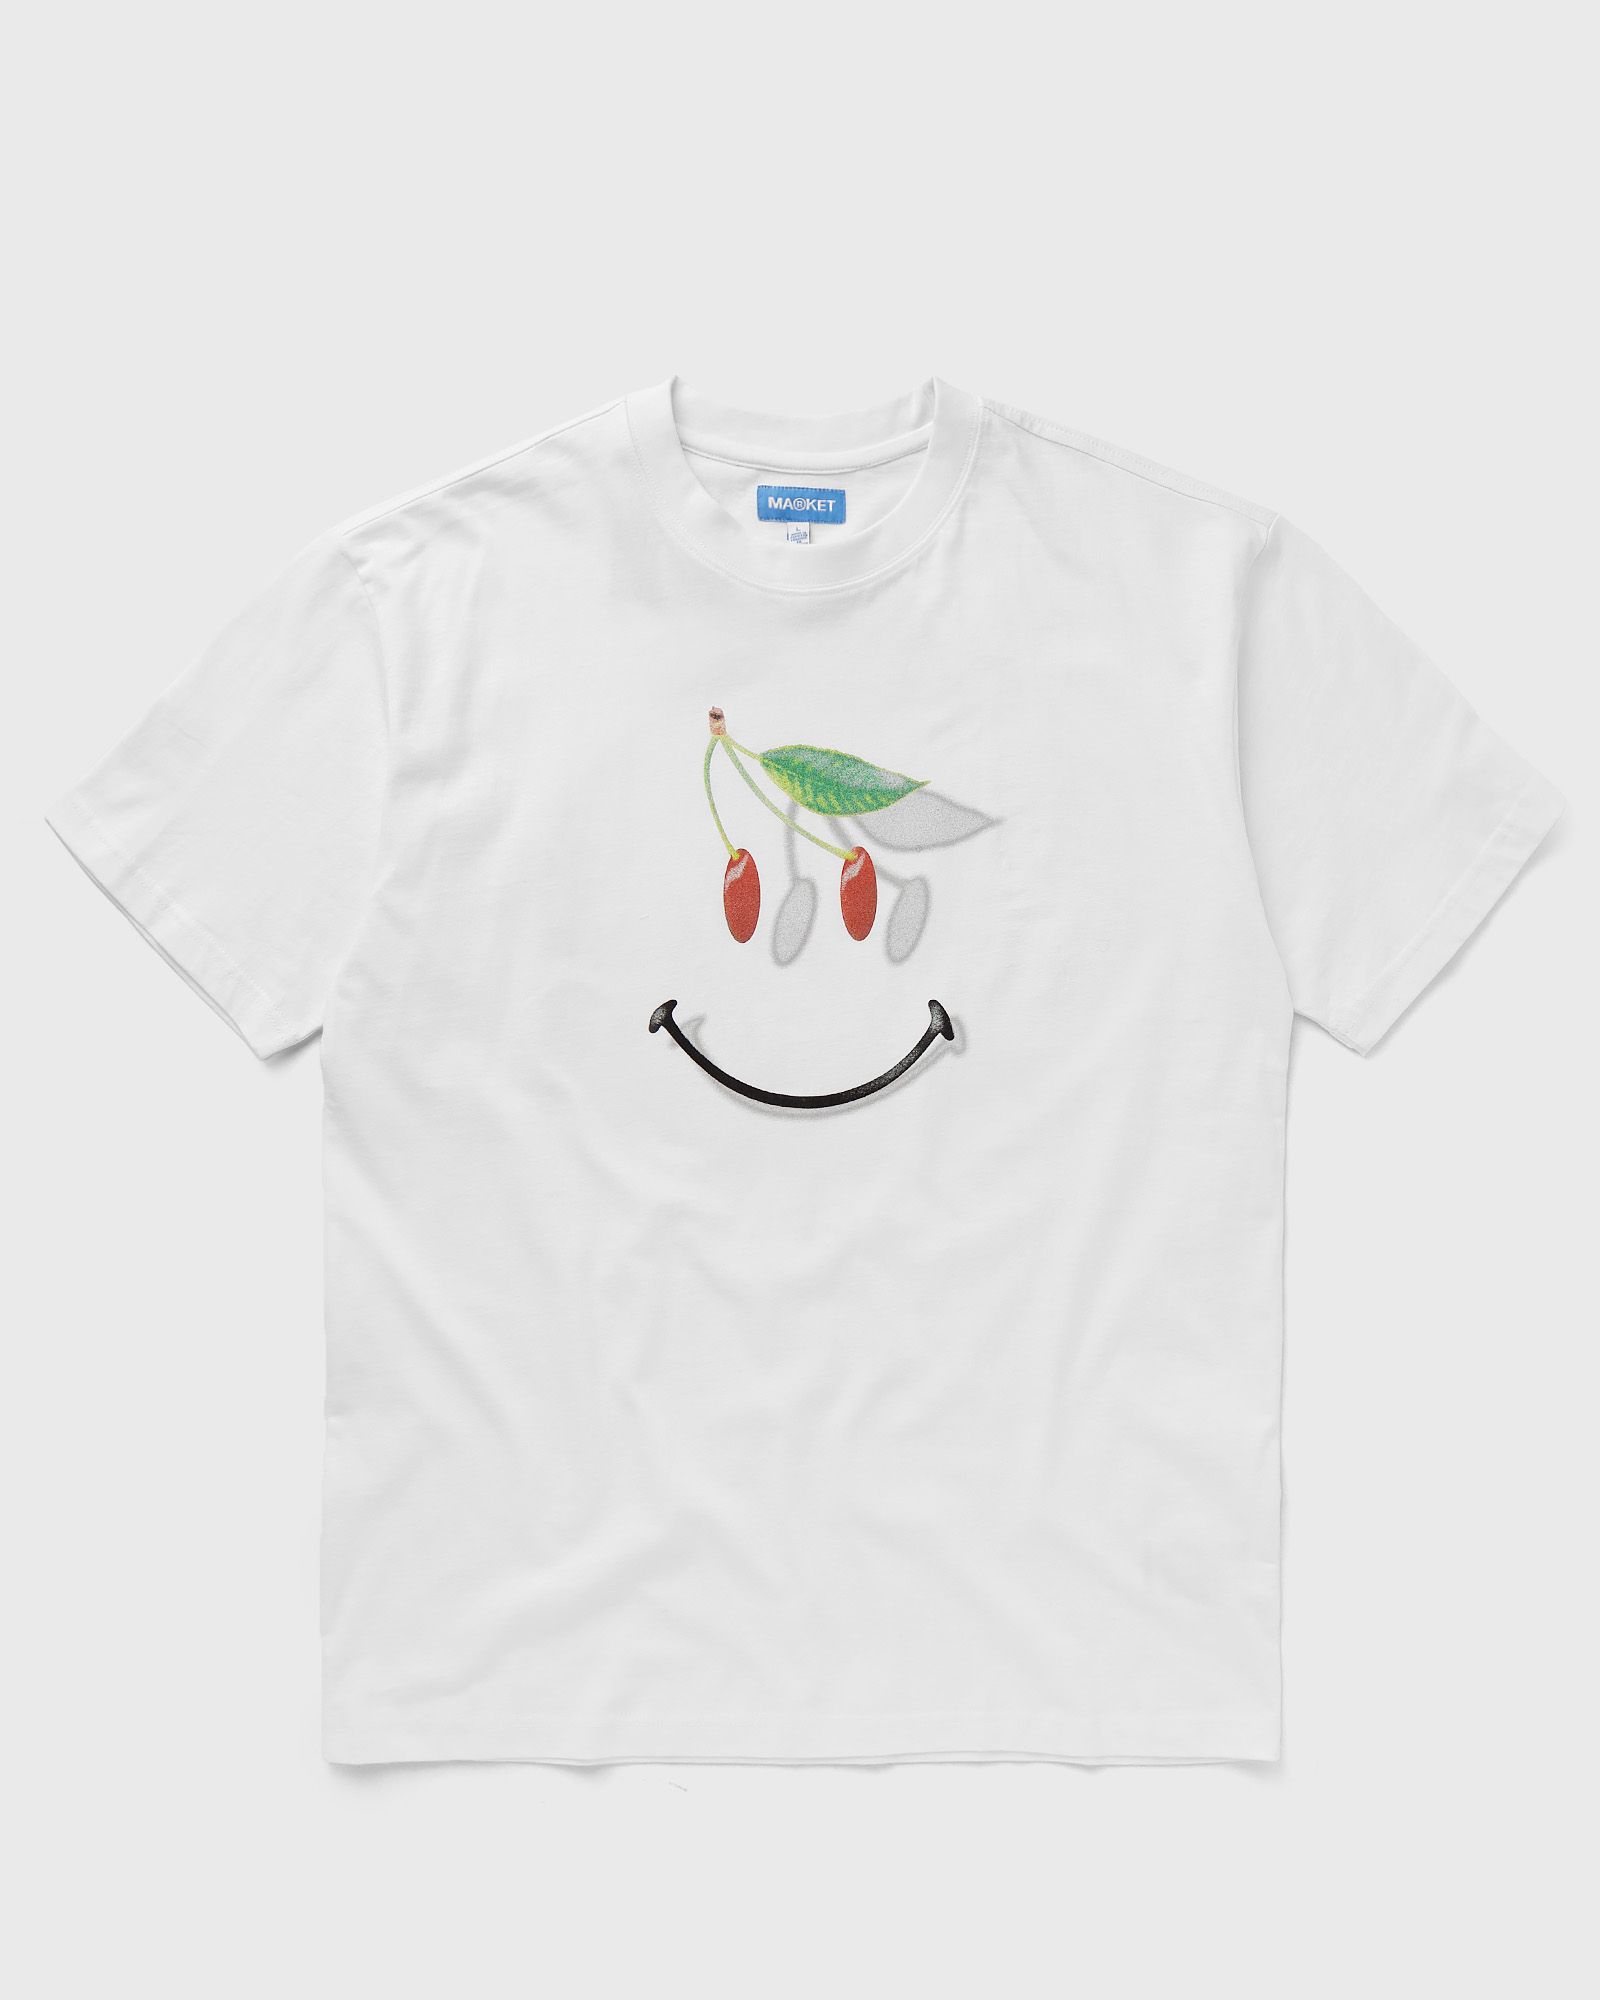 Market - smiley ripe t-shirt men shortsleeves white in größe:l